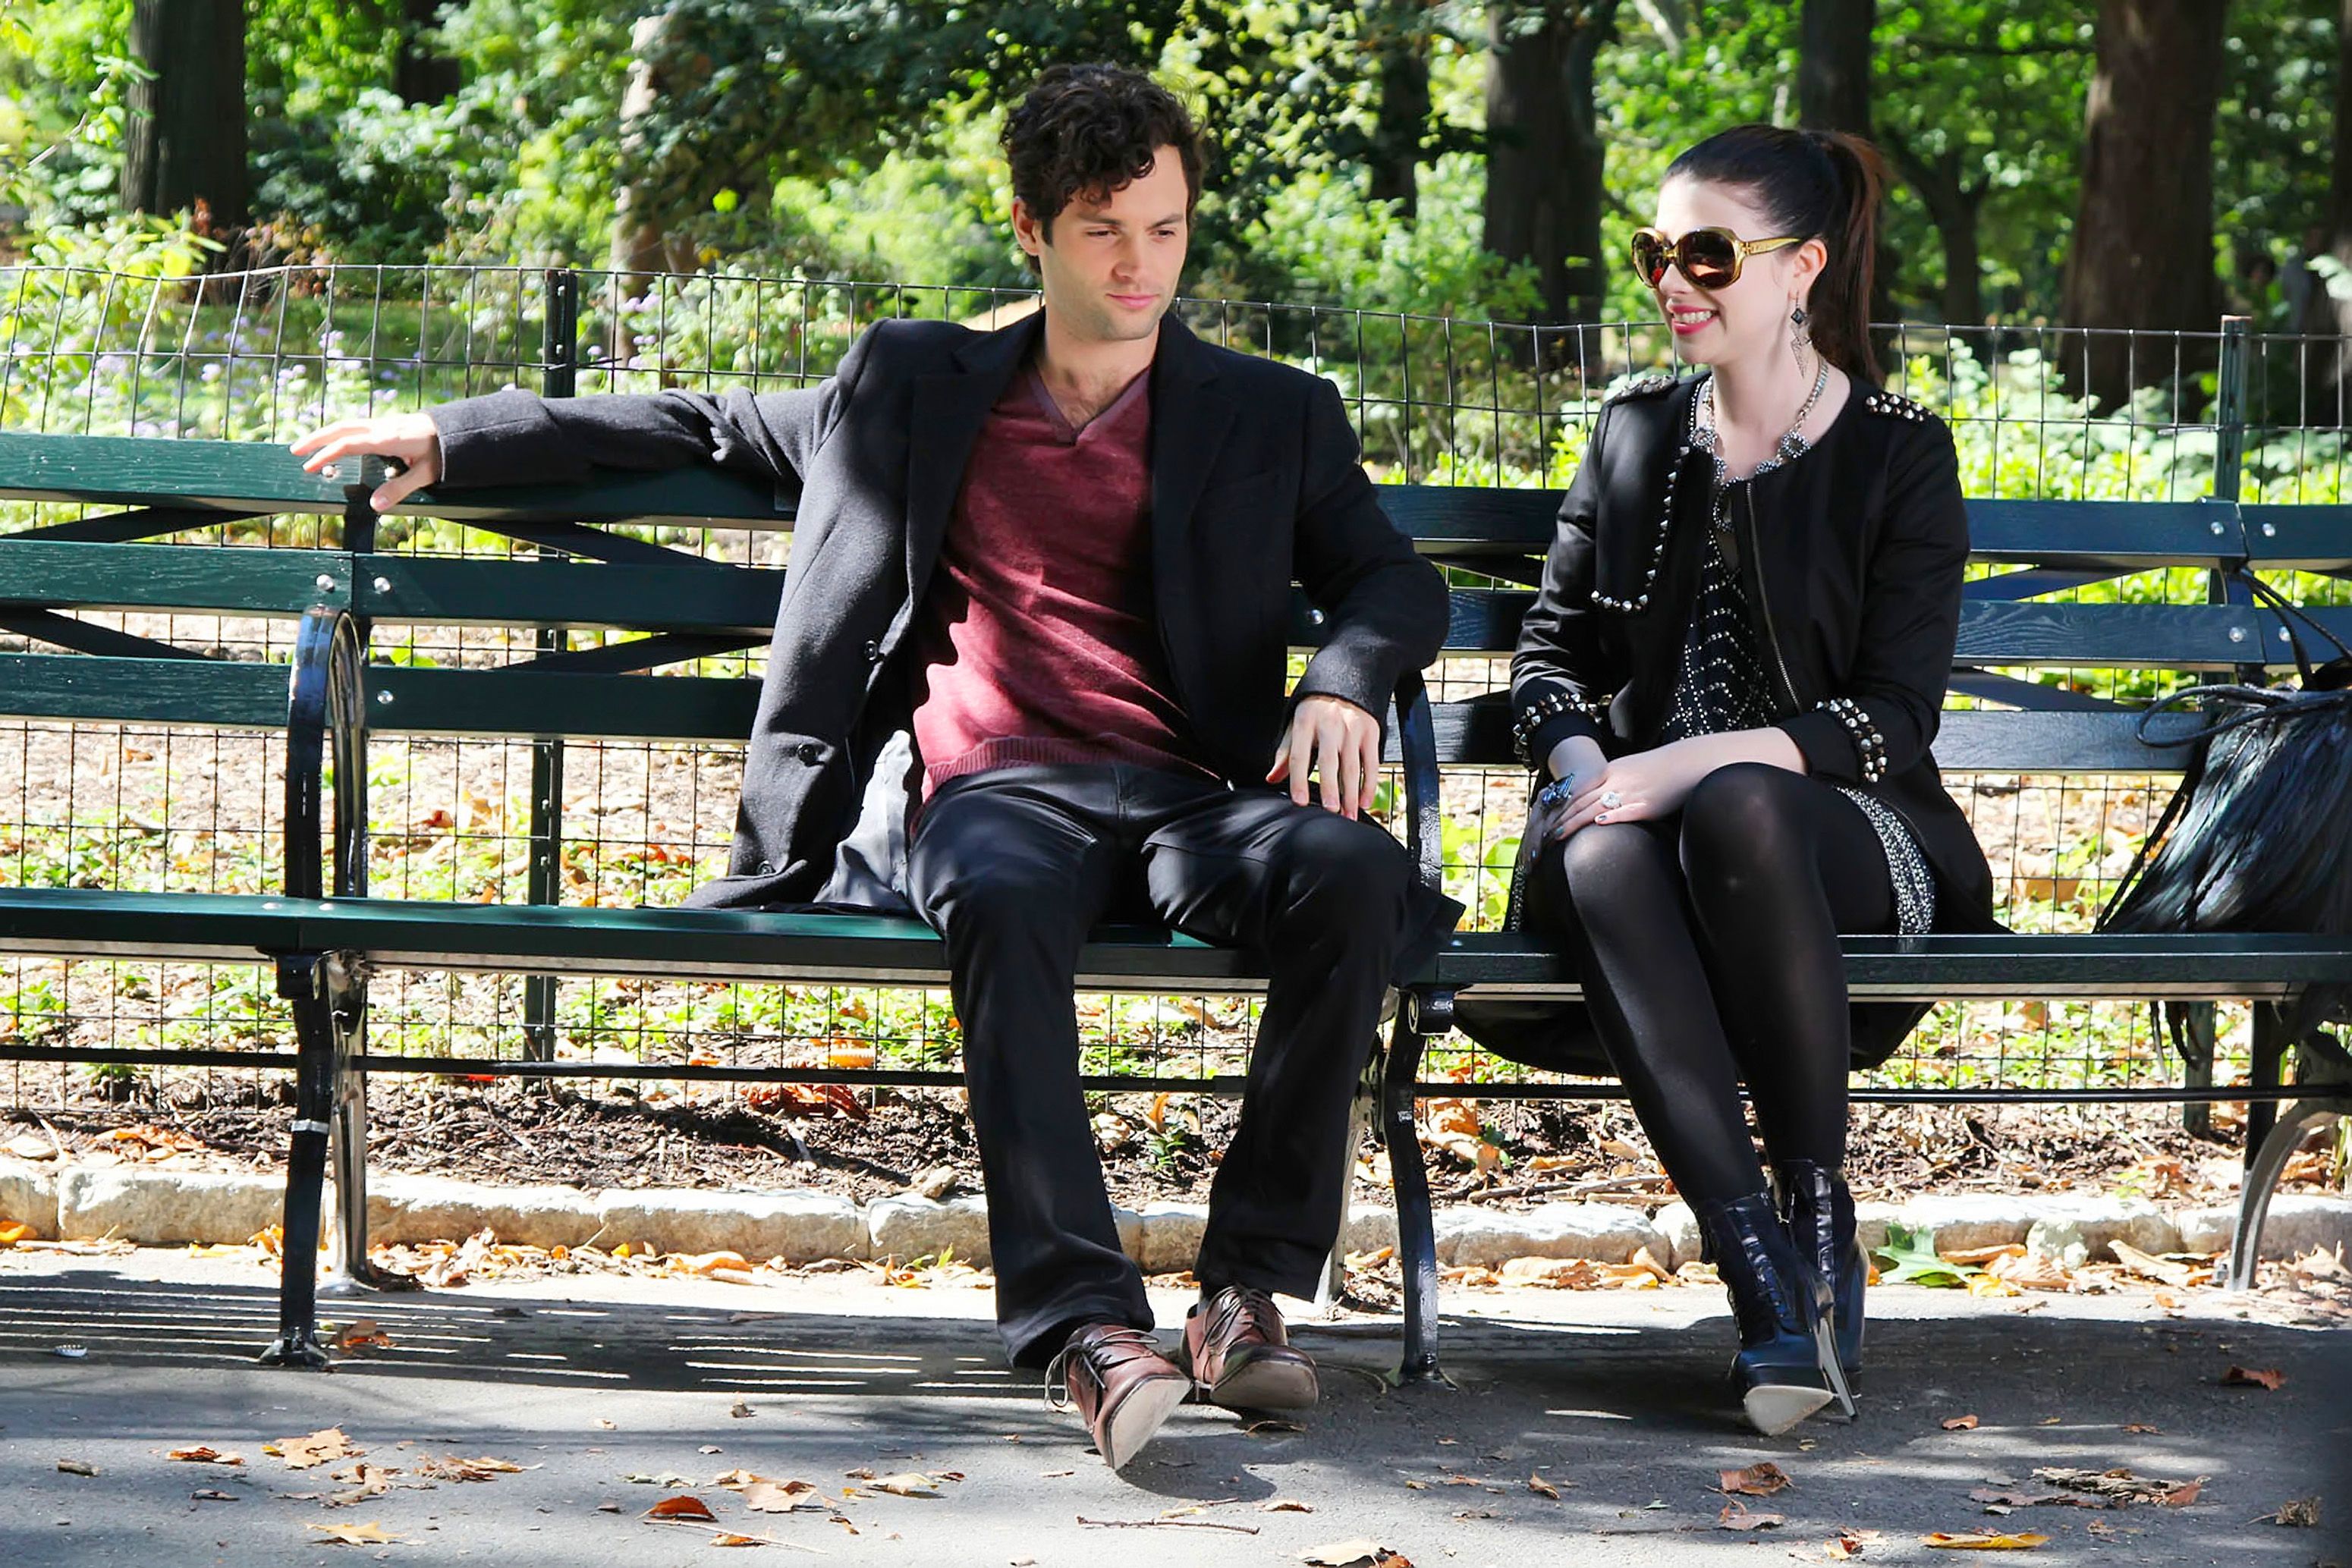 Gossip Girl Season 2 Teases Georgina Sparks' Return In HBO Max Reboot